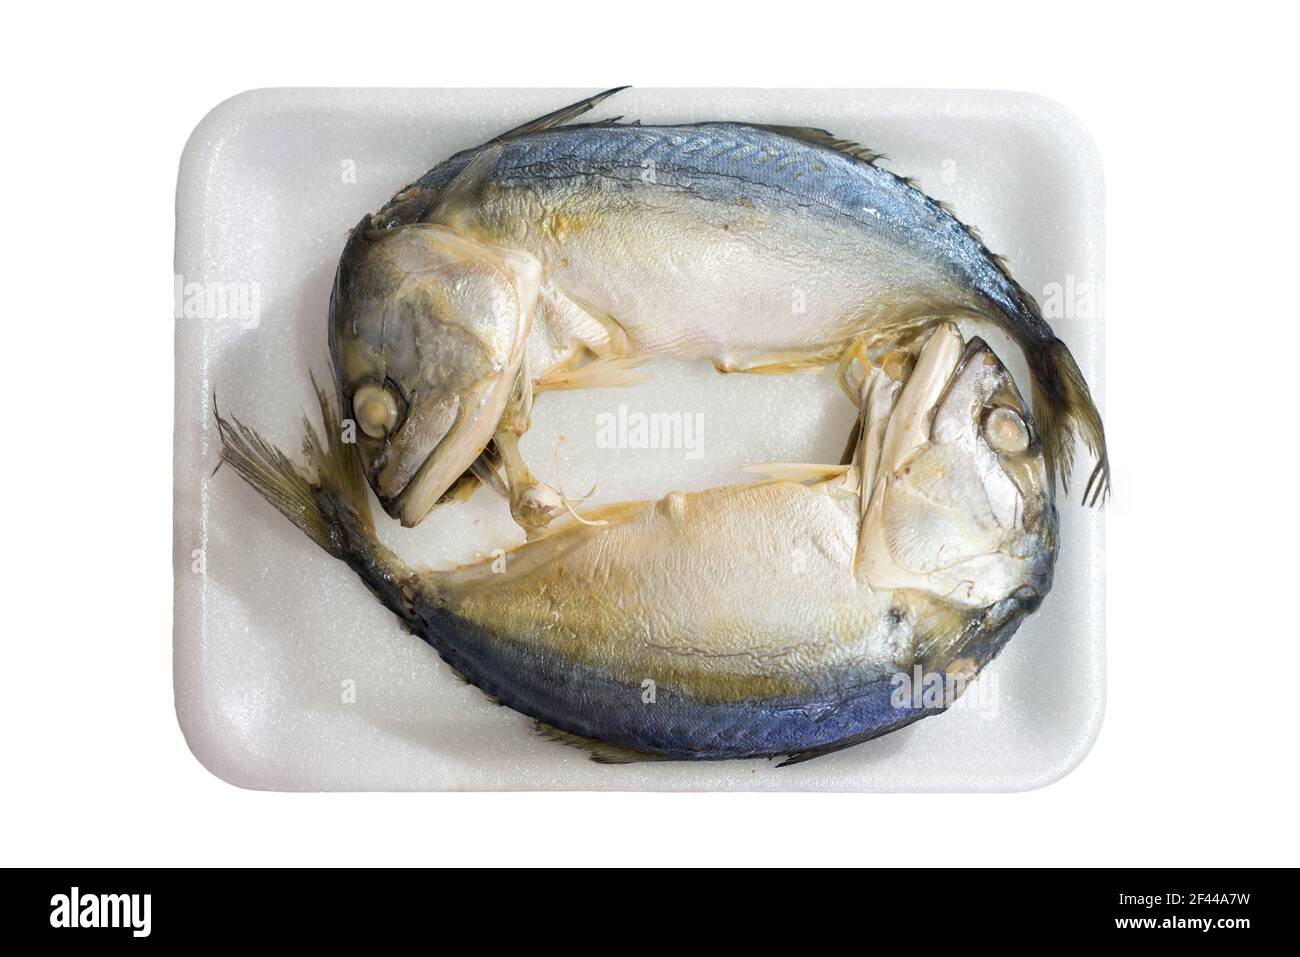 Gestreamte Makrele, Makrelenfisch in Plastikverpackung. Stockfoto